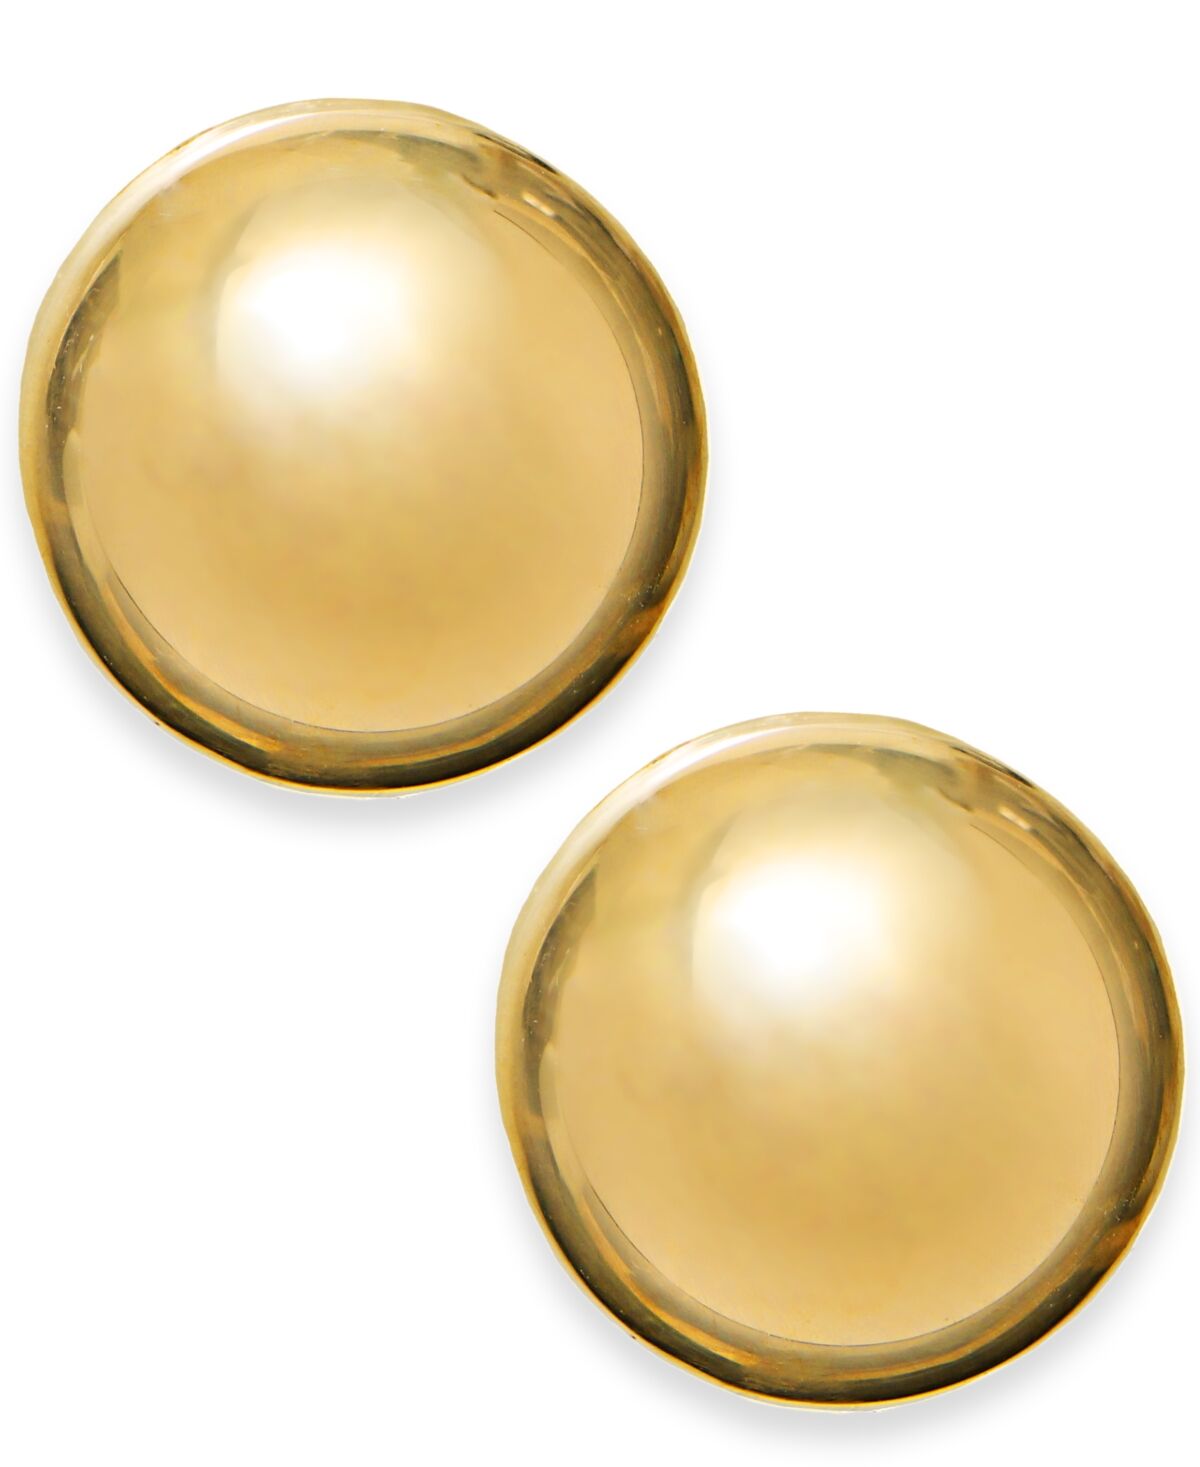 Macy's 14k Gold Earrings, 12mm Domed Ball Stud Earrings